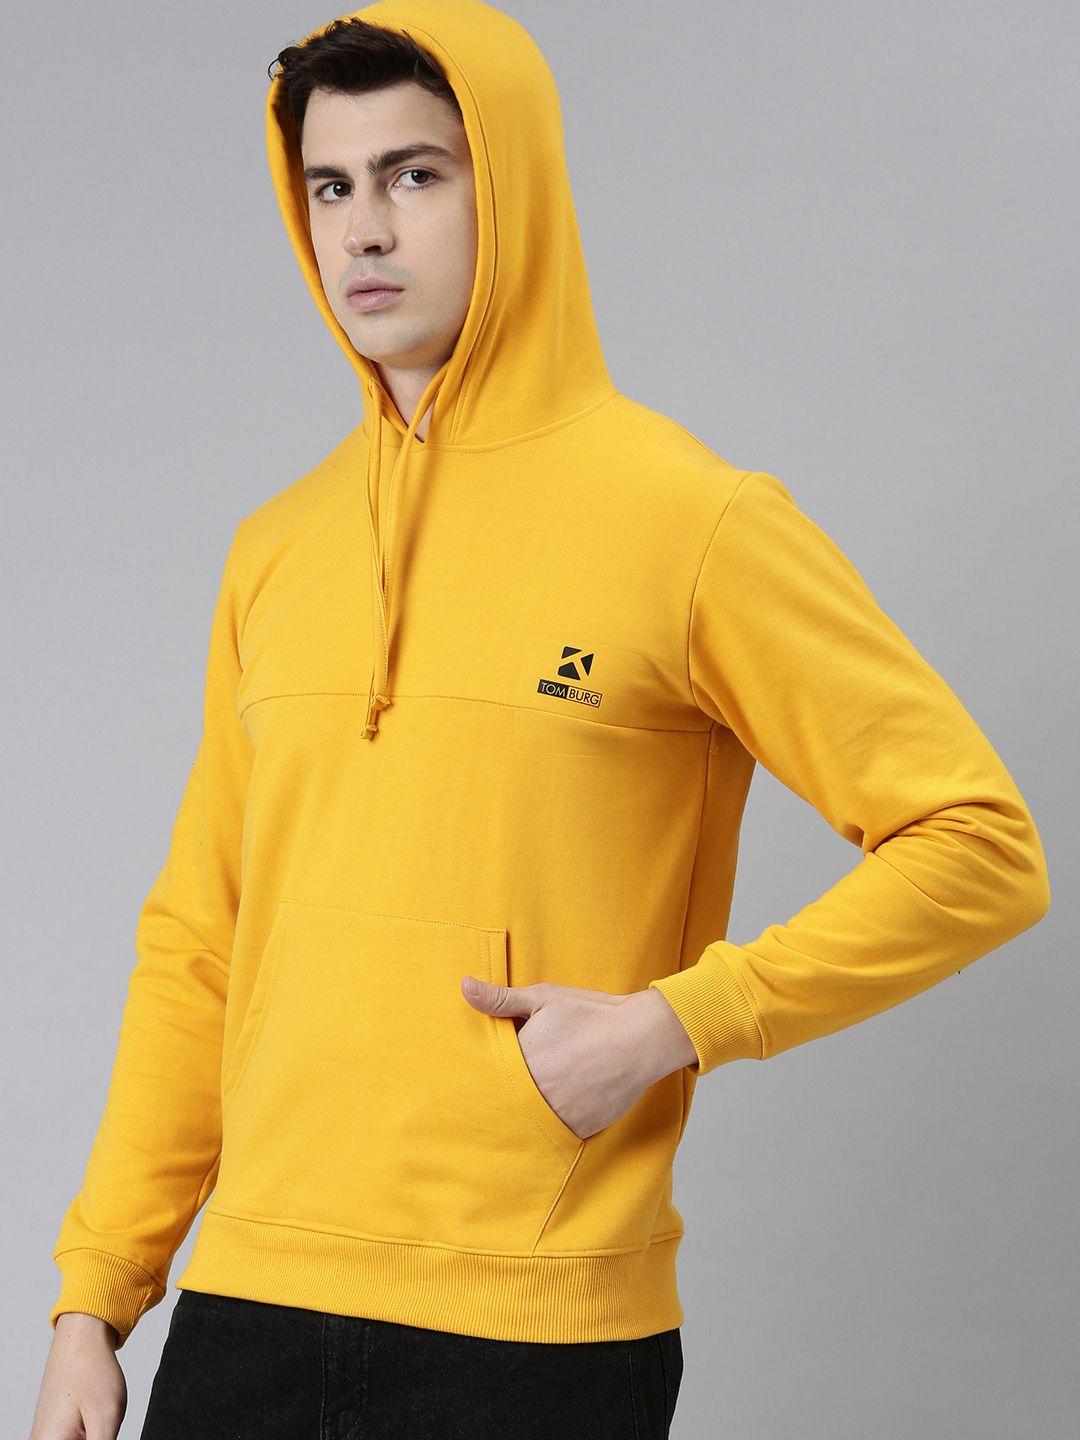 tom burg men mustard yellow hooded fleece sweatshirt